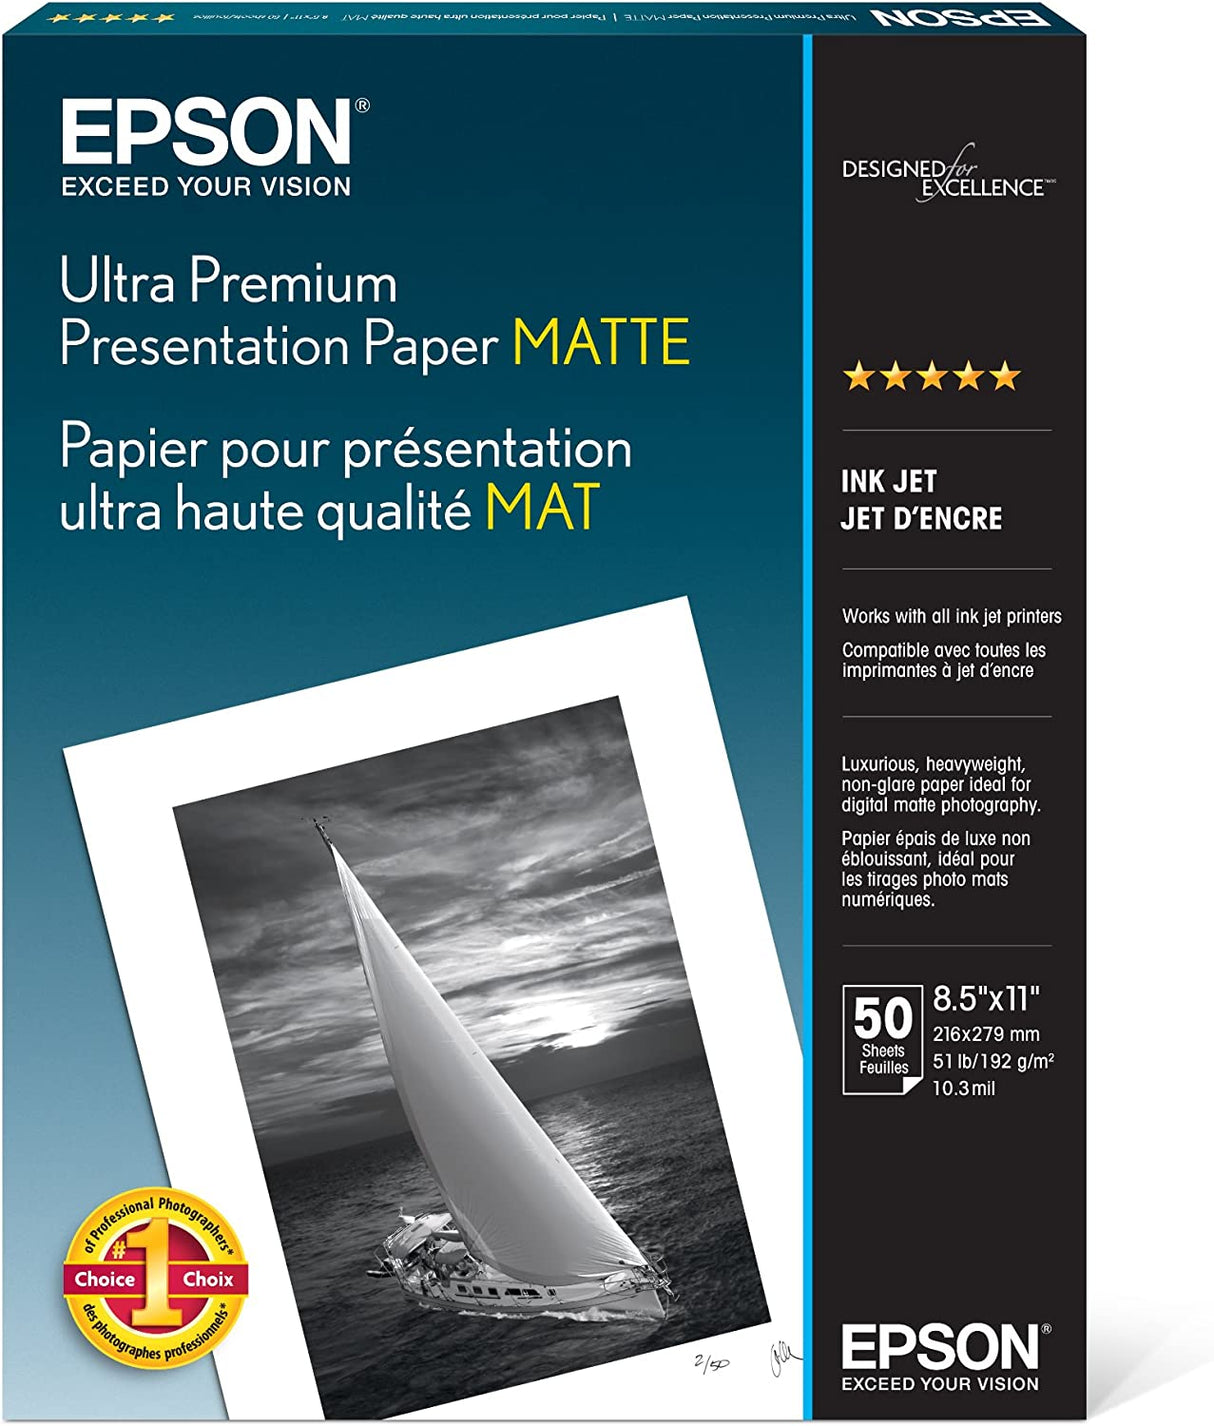 Epson Ultra Premium Presentation Paper MATTE (8.5x11 Inches, 50 Sheets) (S041341),White 1 DESIGN 1